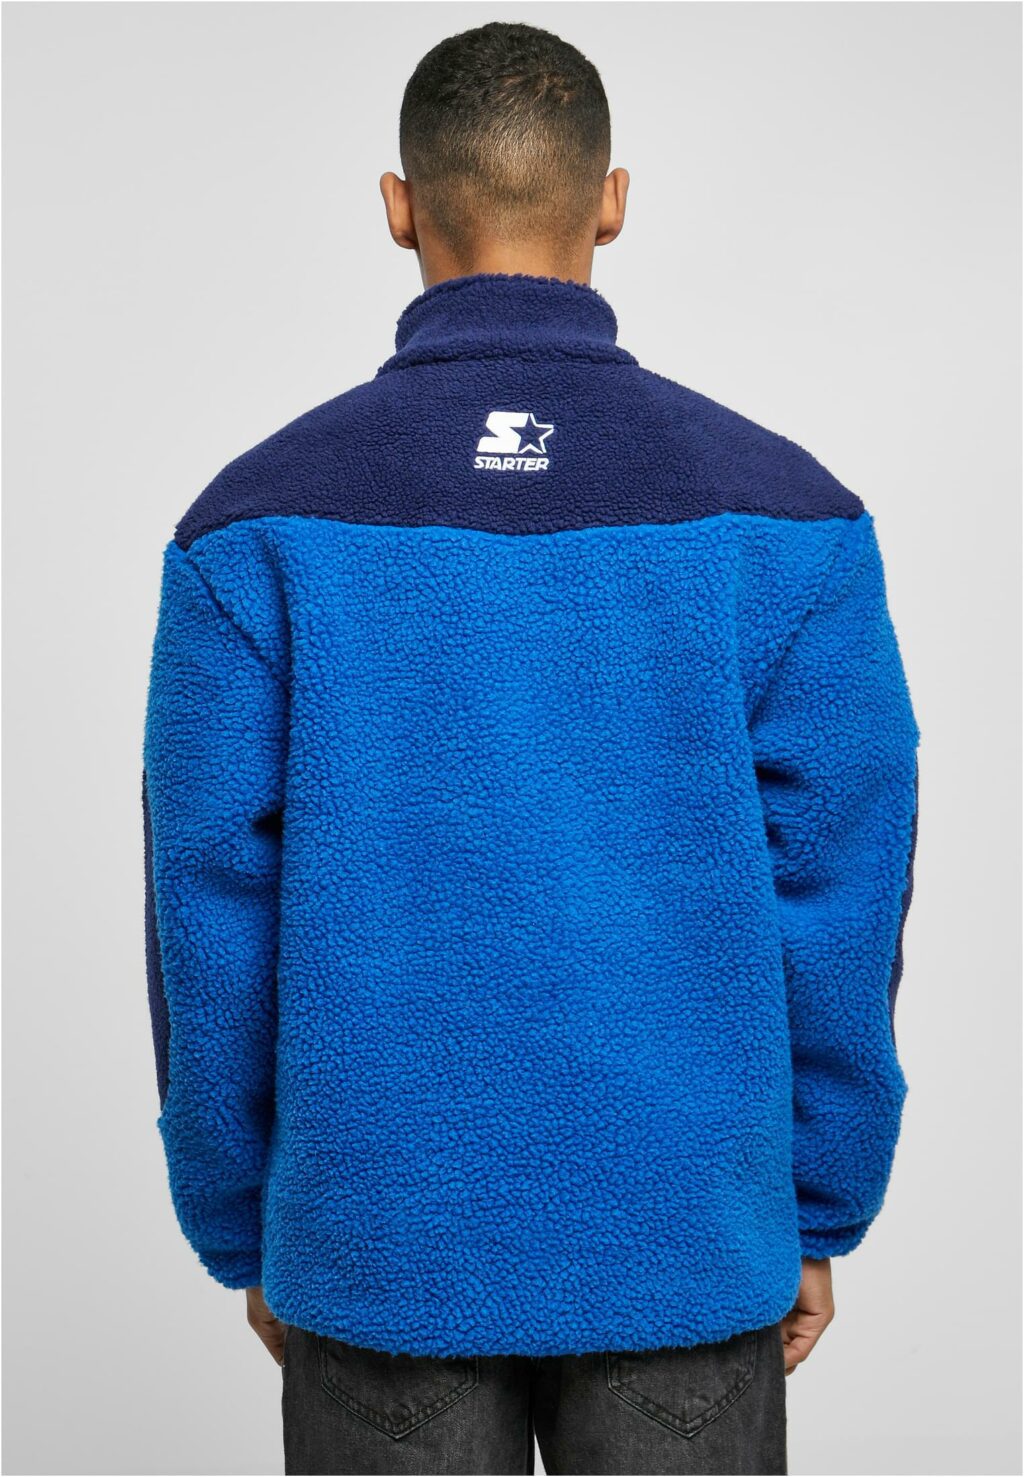 Starter Sherpa Fleece Jacket cobaltblue/darkblue ST363